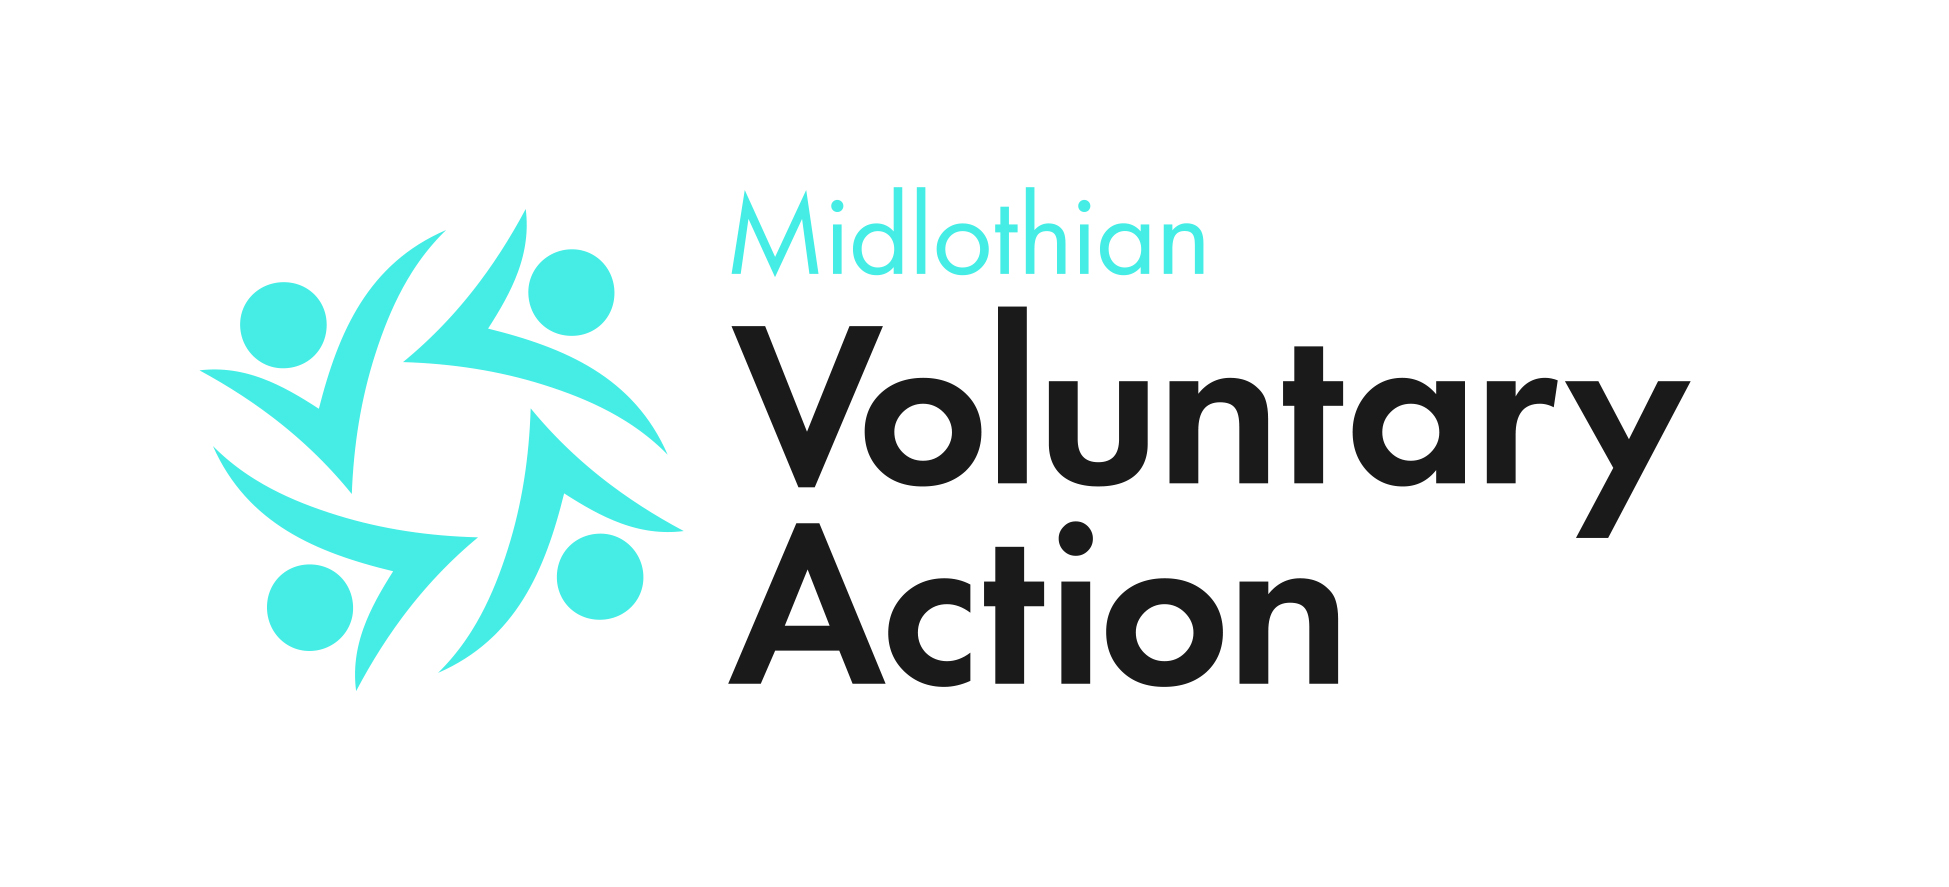 Midlothian Voluntary Action’s 